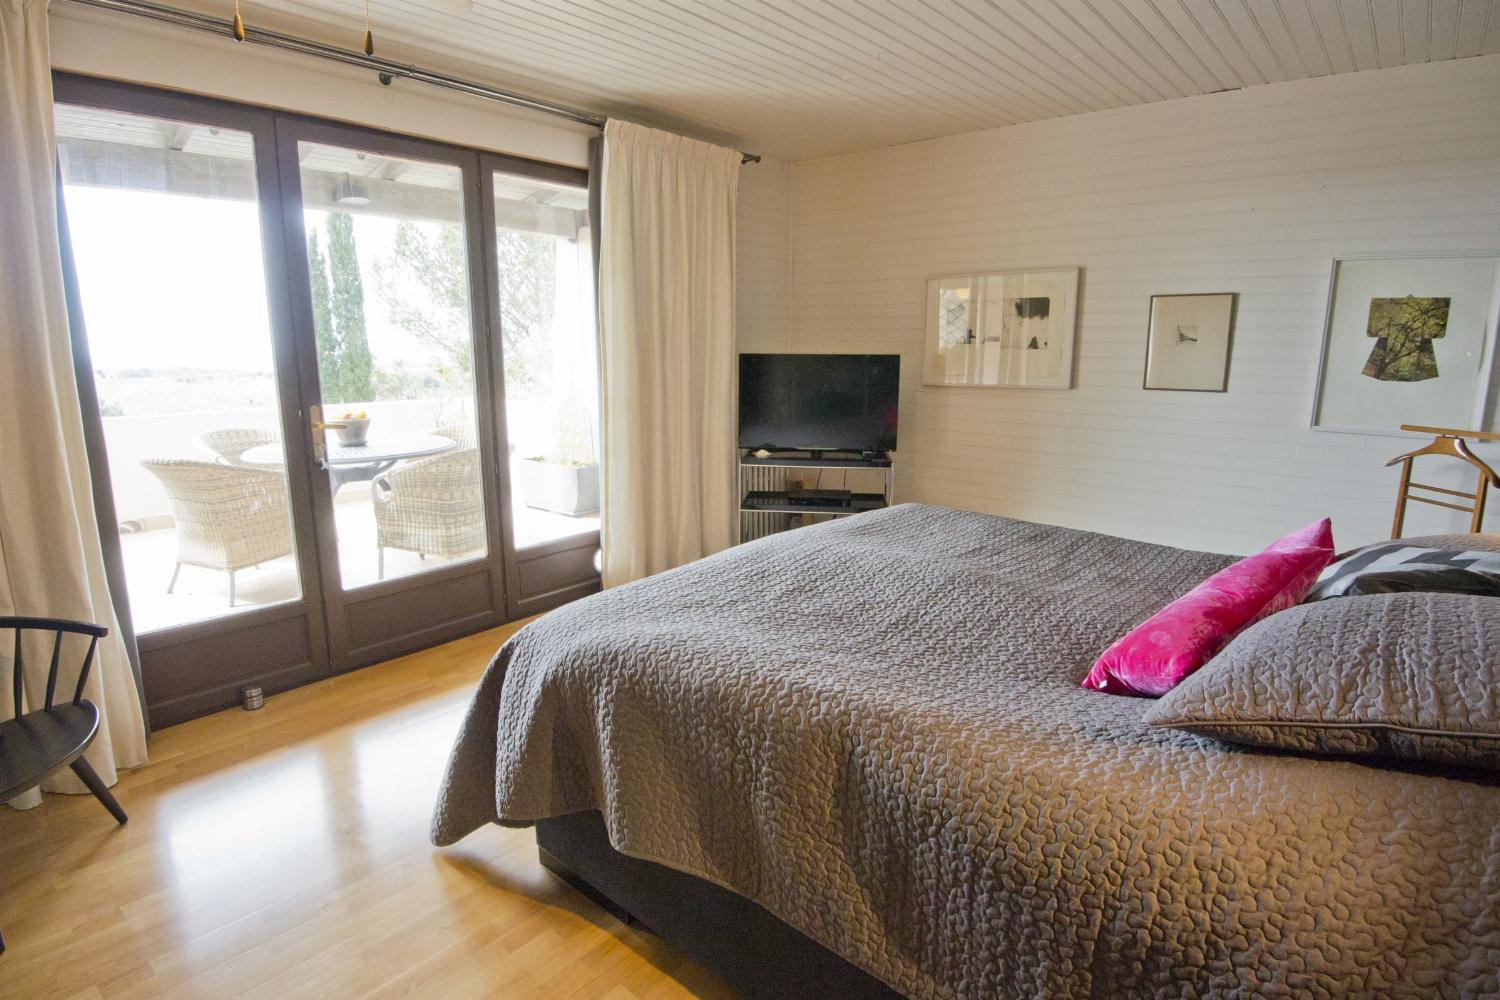 Bedroom | Rental villa in South of France